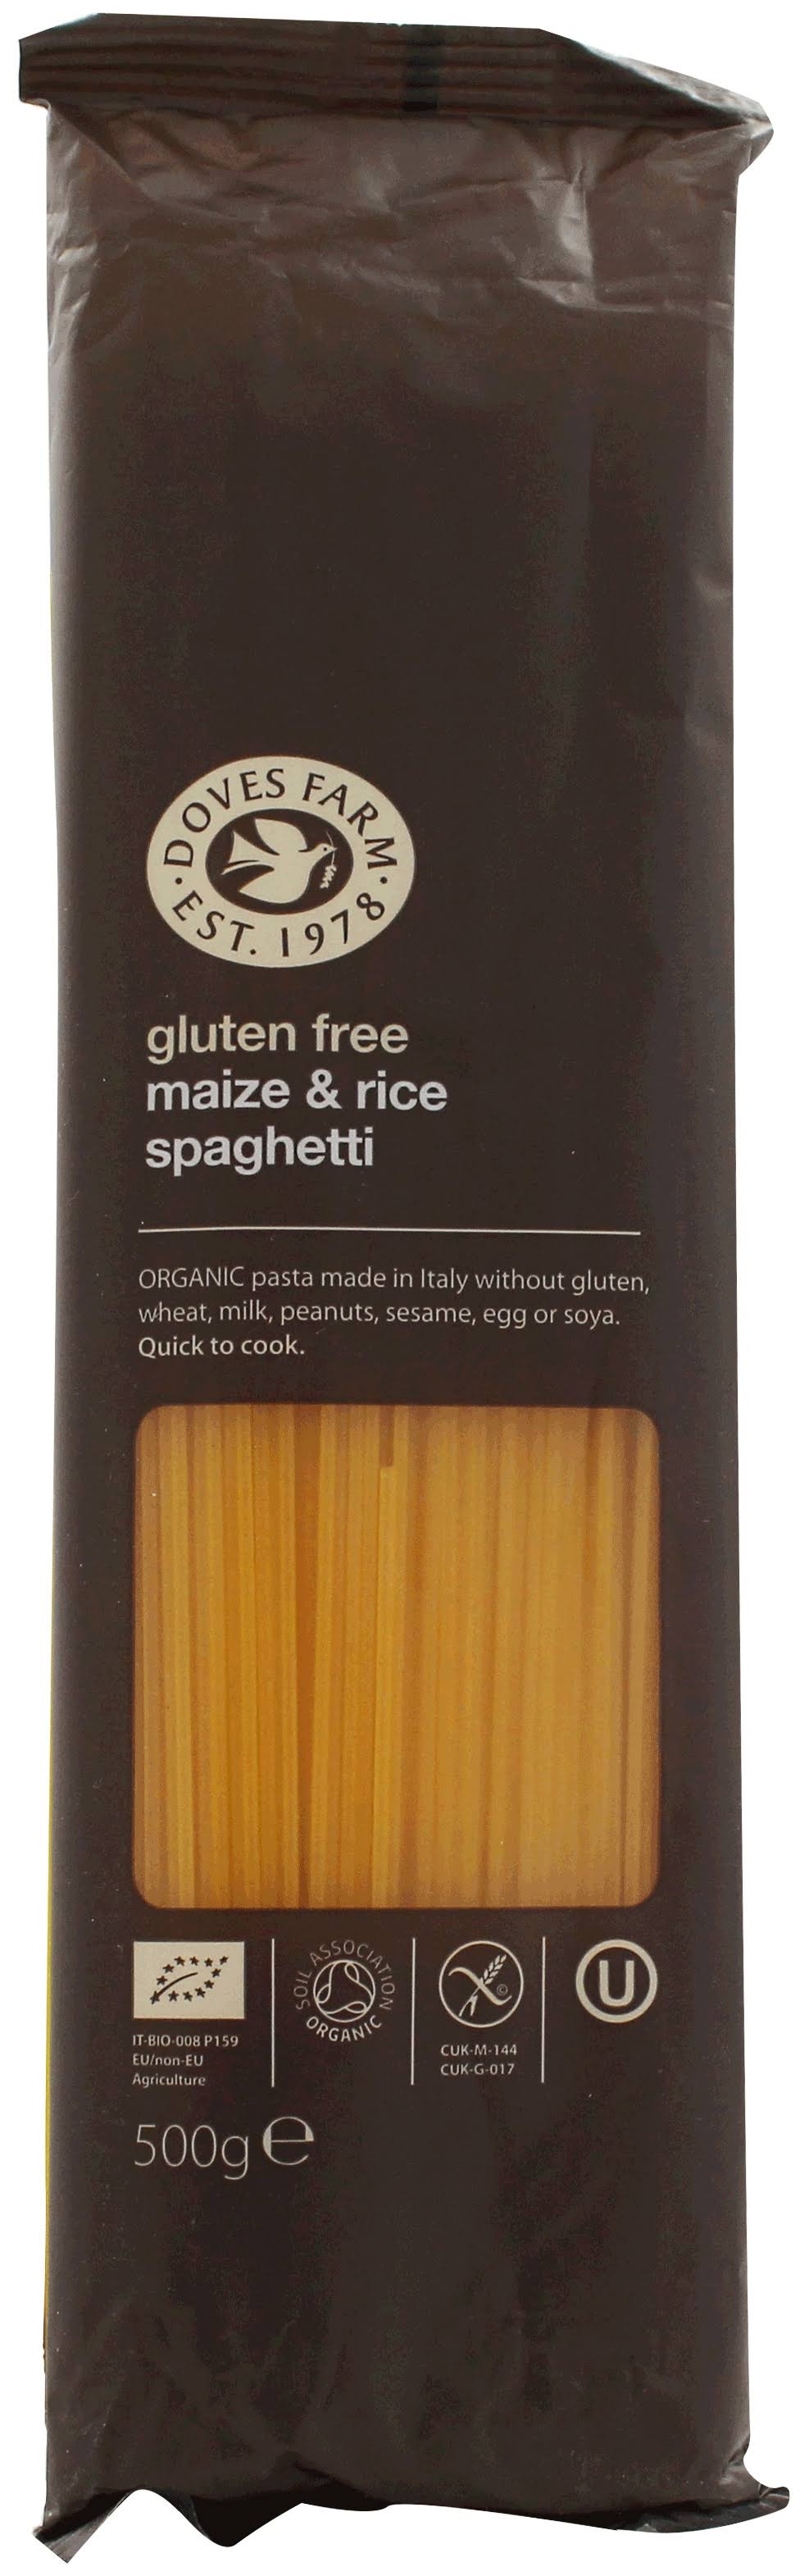 Doves Farm Gluten Free Organic Spaghetti - 500g